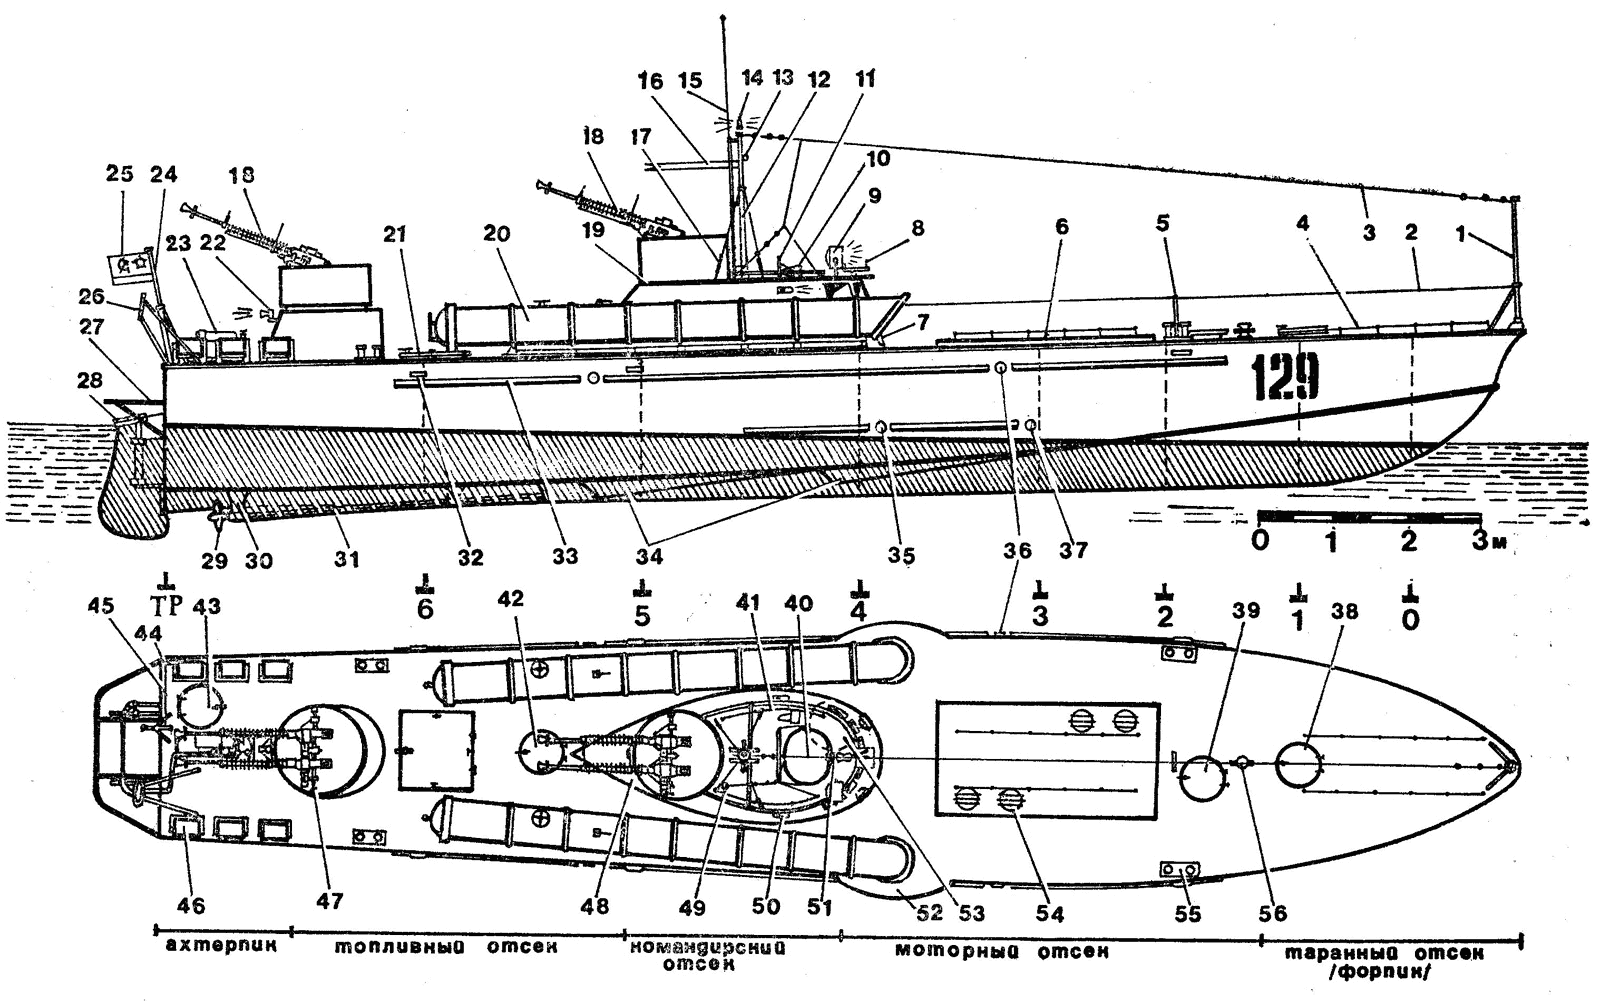 Motor torpedo boat blueprint